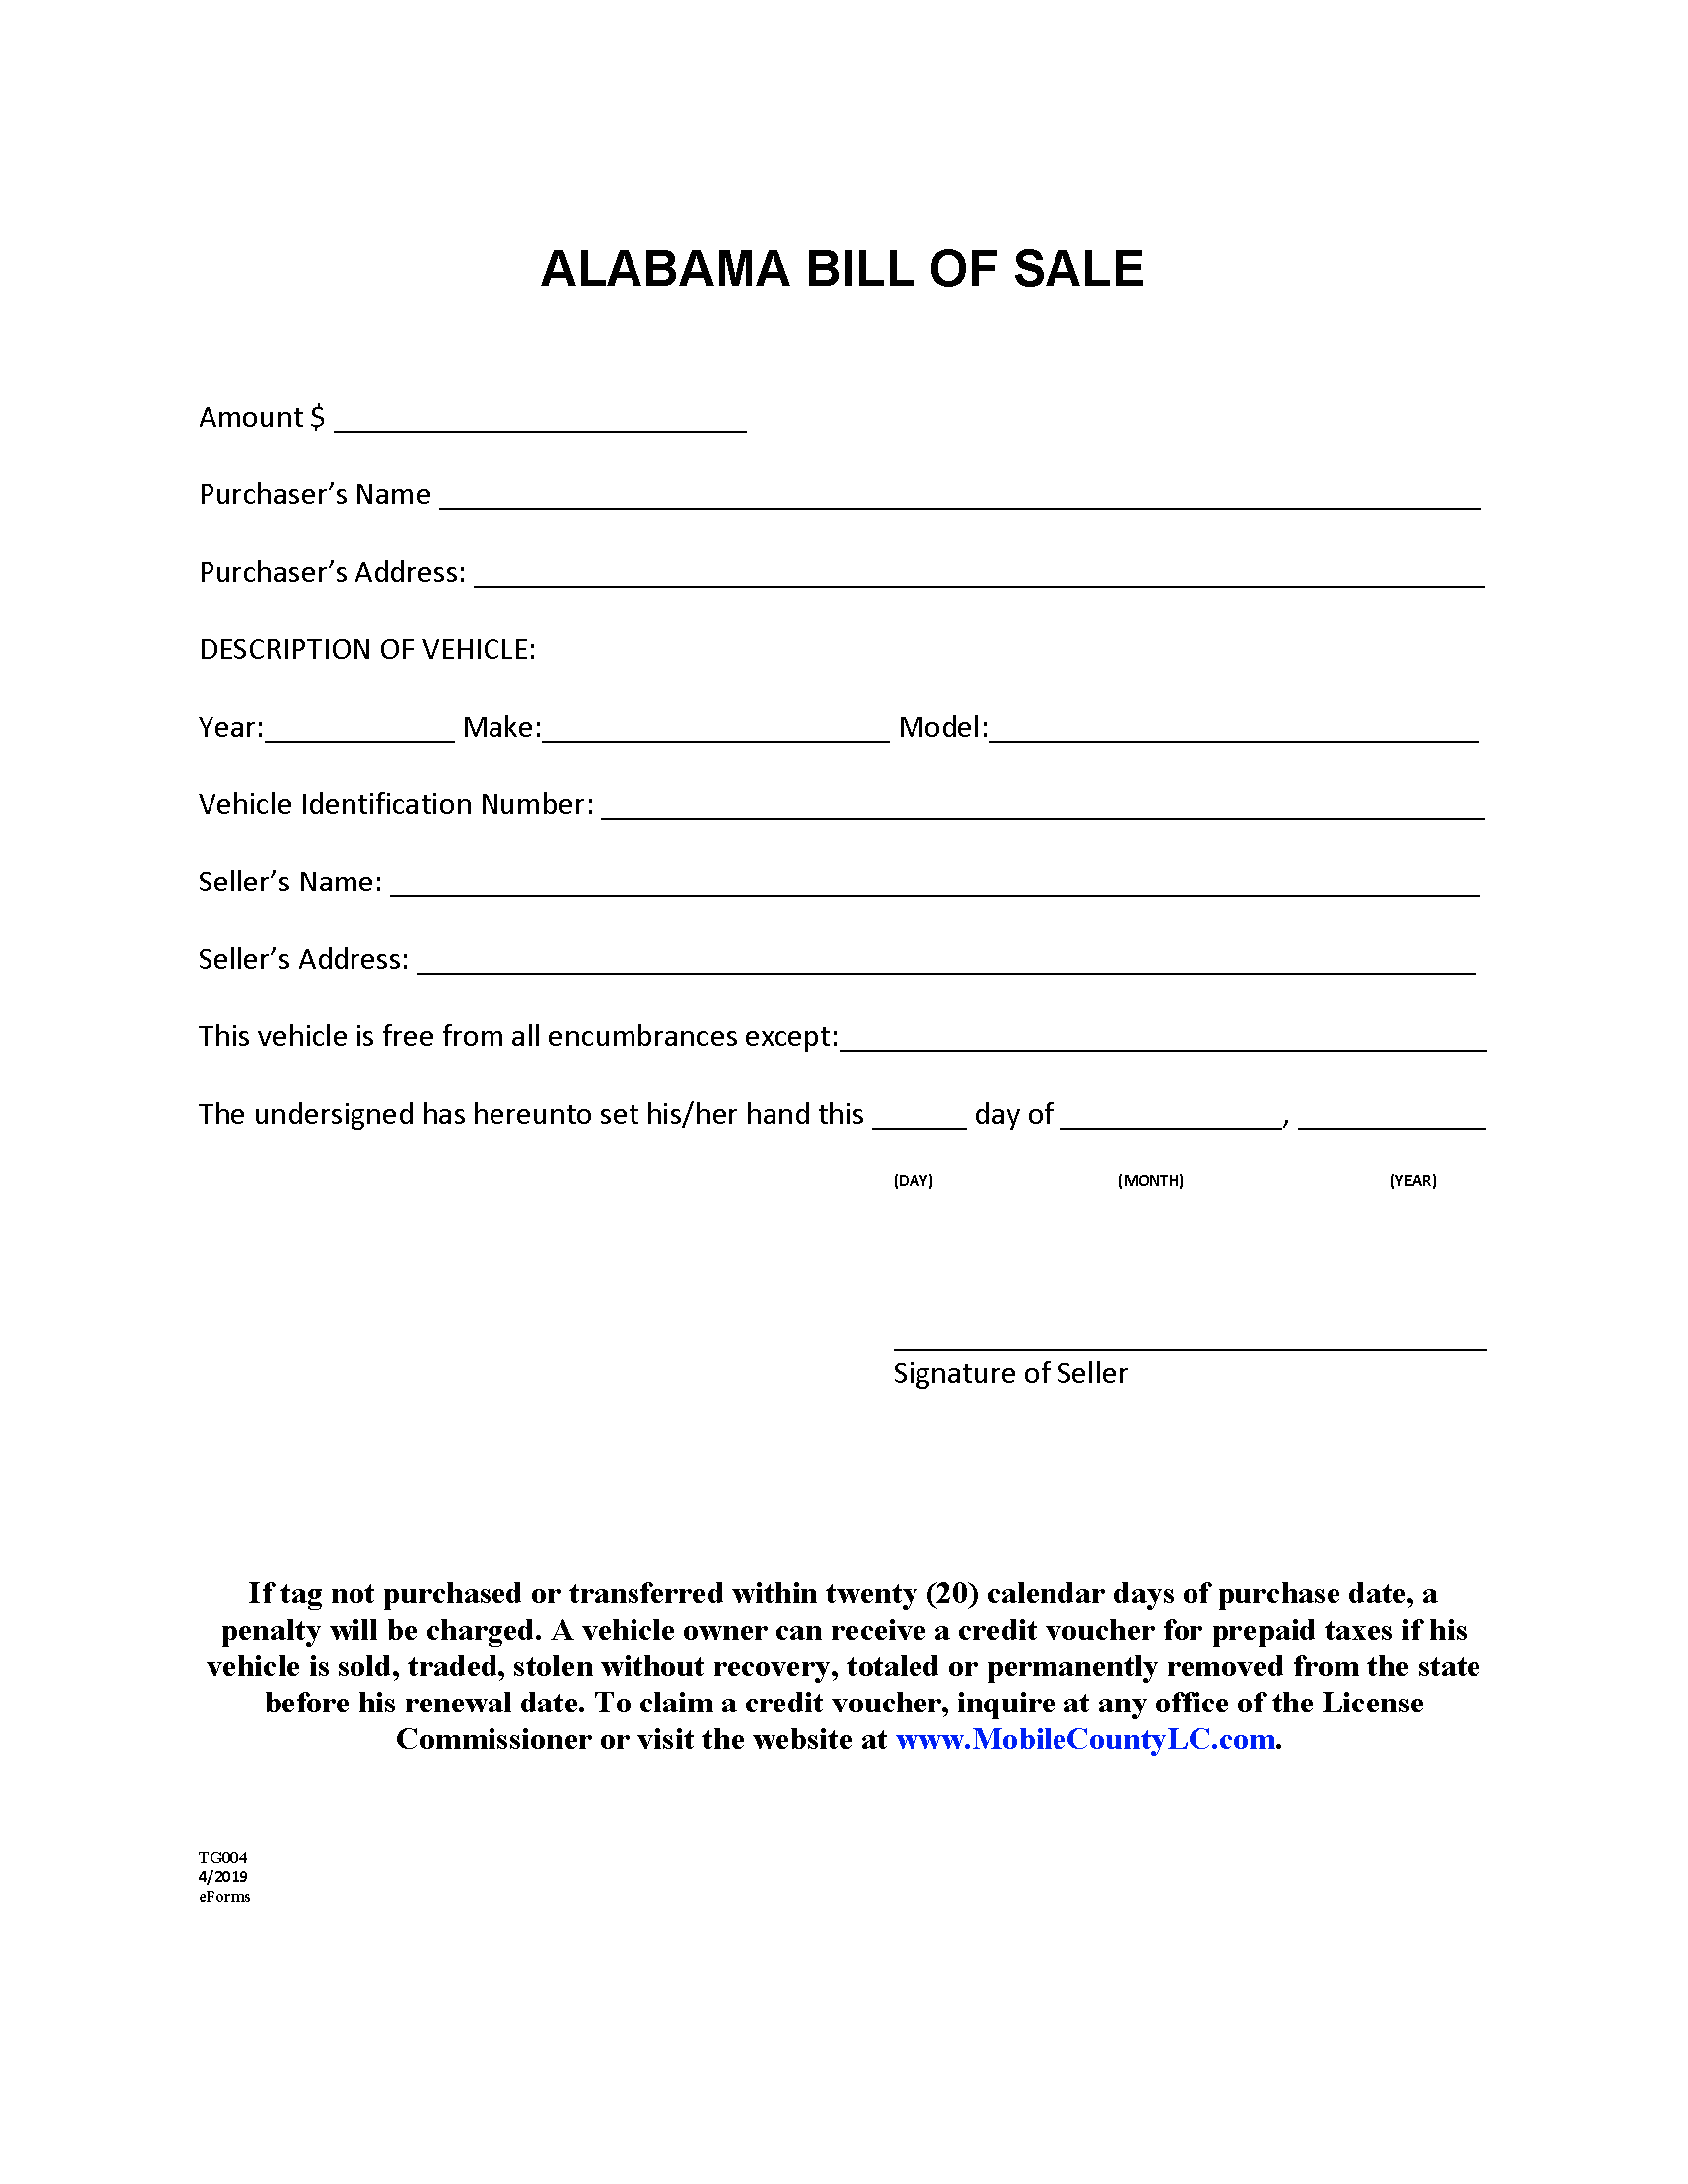 free-alabama-motor-vehicle-bill-of-sale-form-word-pdf-eforms-cloud